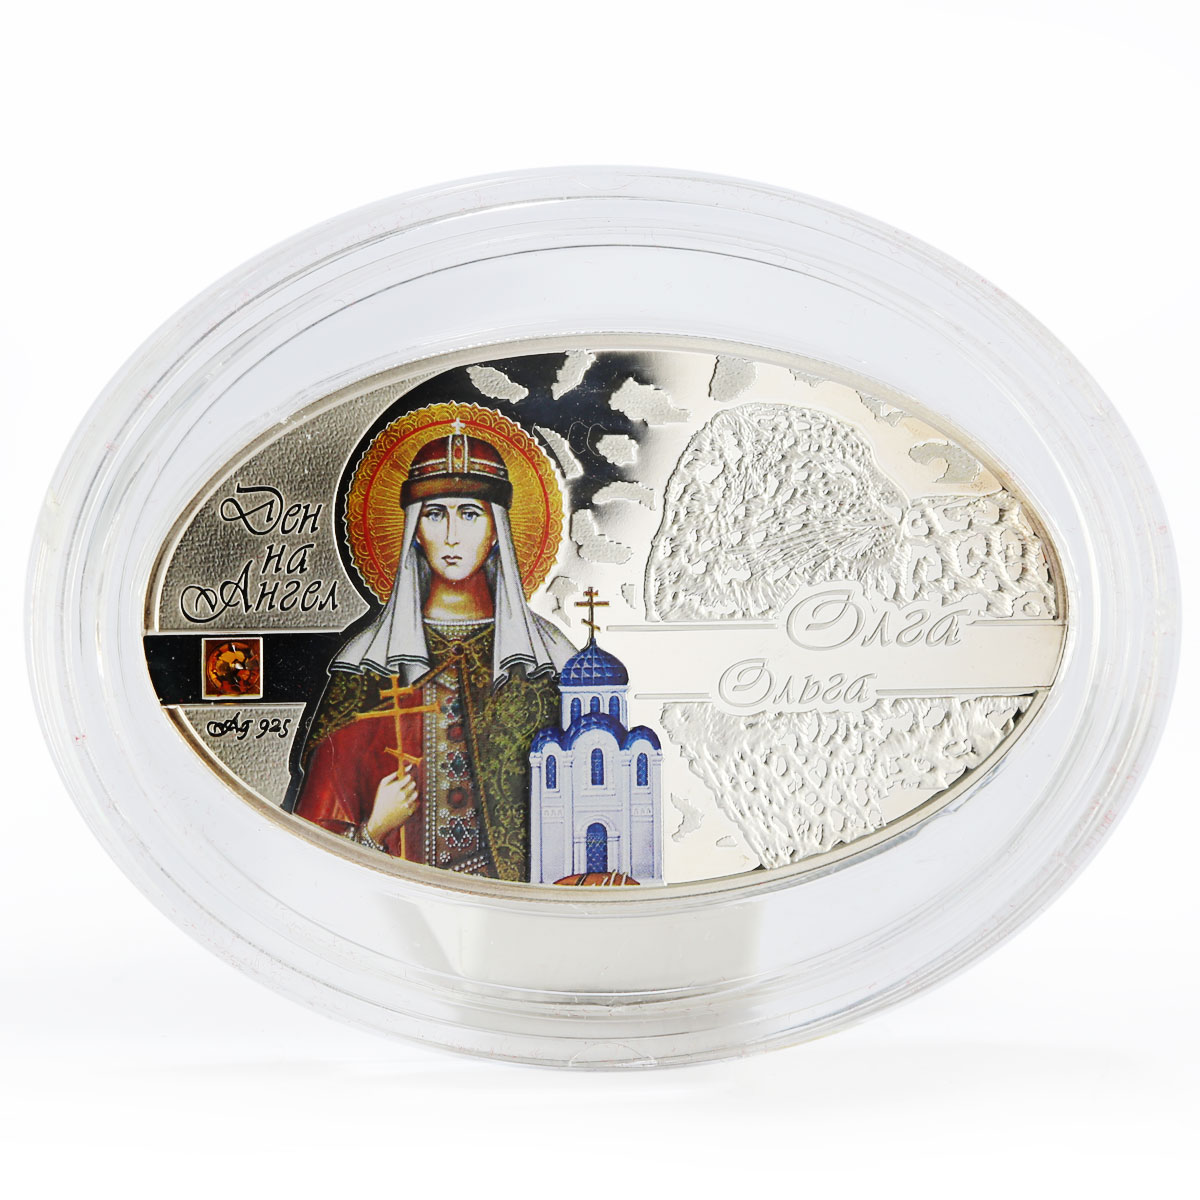 Macedonia 100 denars Angel Day Olga crystal colored proof silver coin 2015